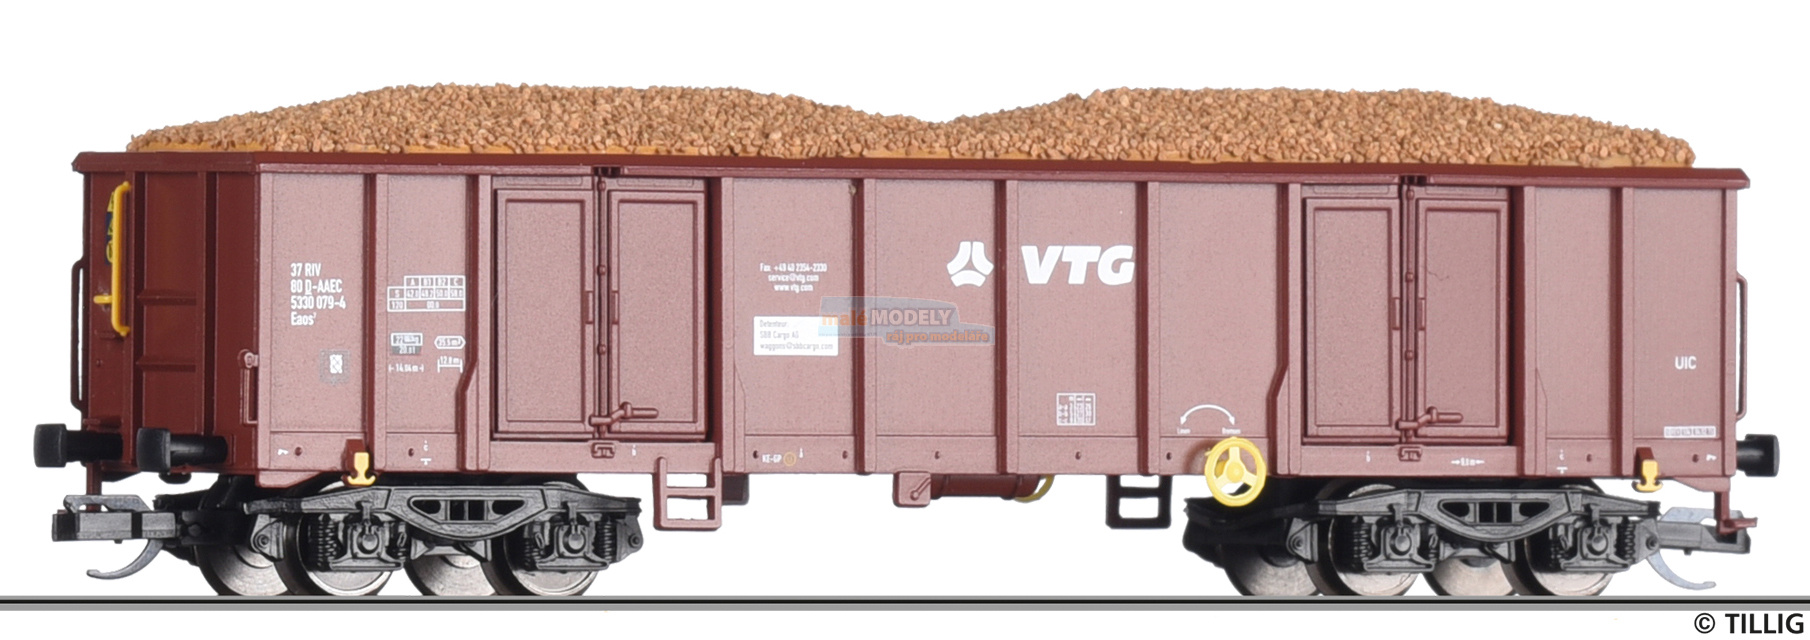 Otevřený nákladní vůz Eaos „VTG“ s nákladem, AAE Cargo